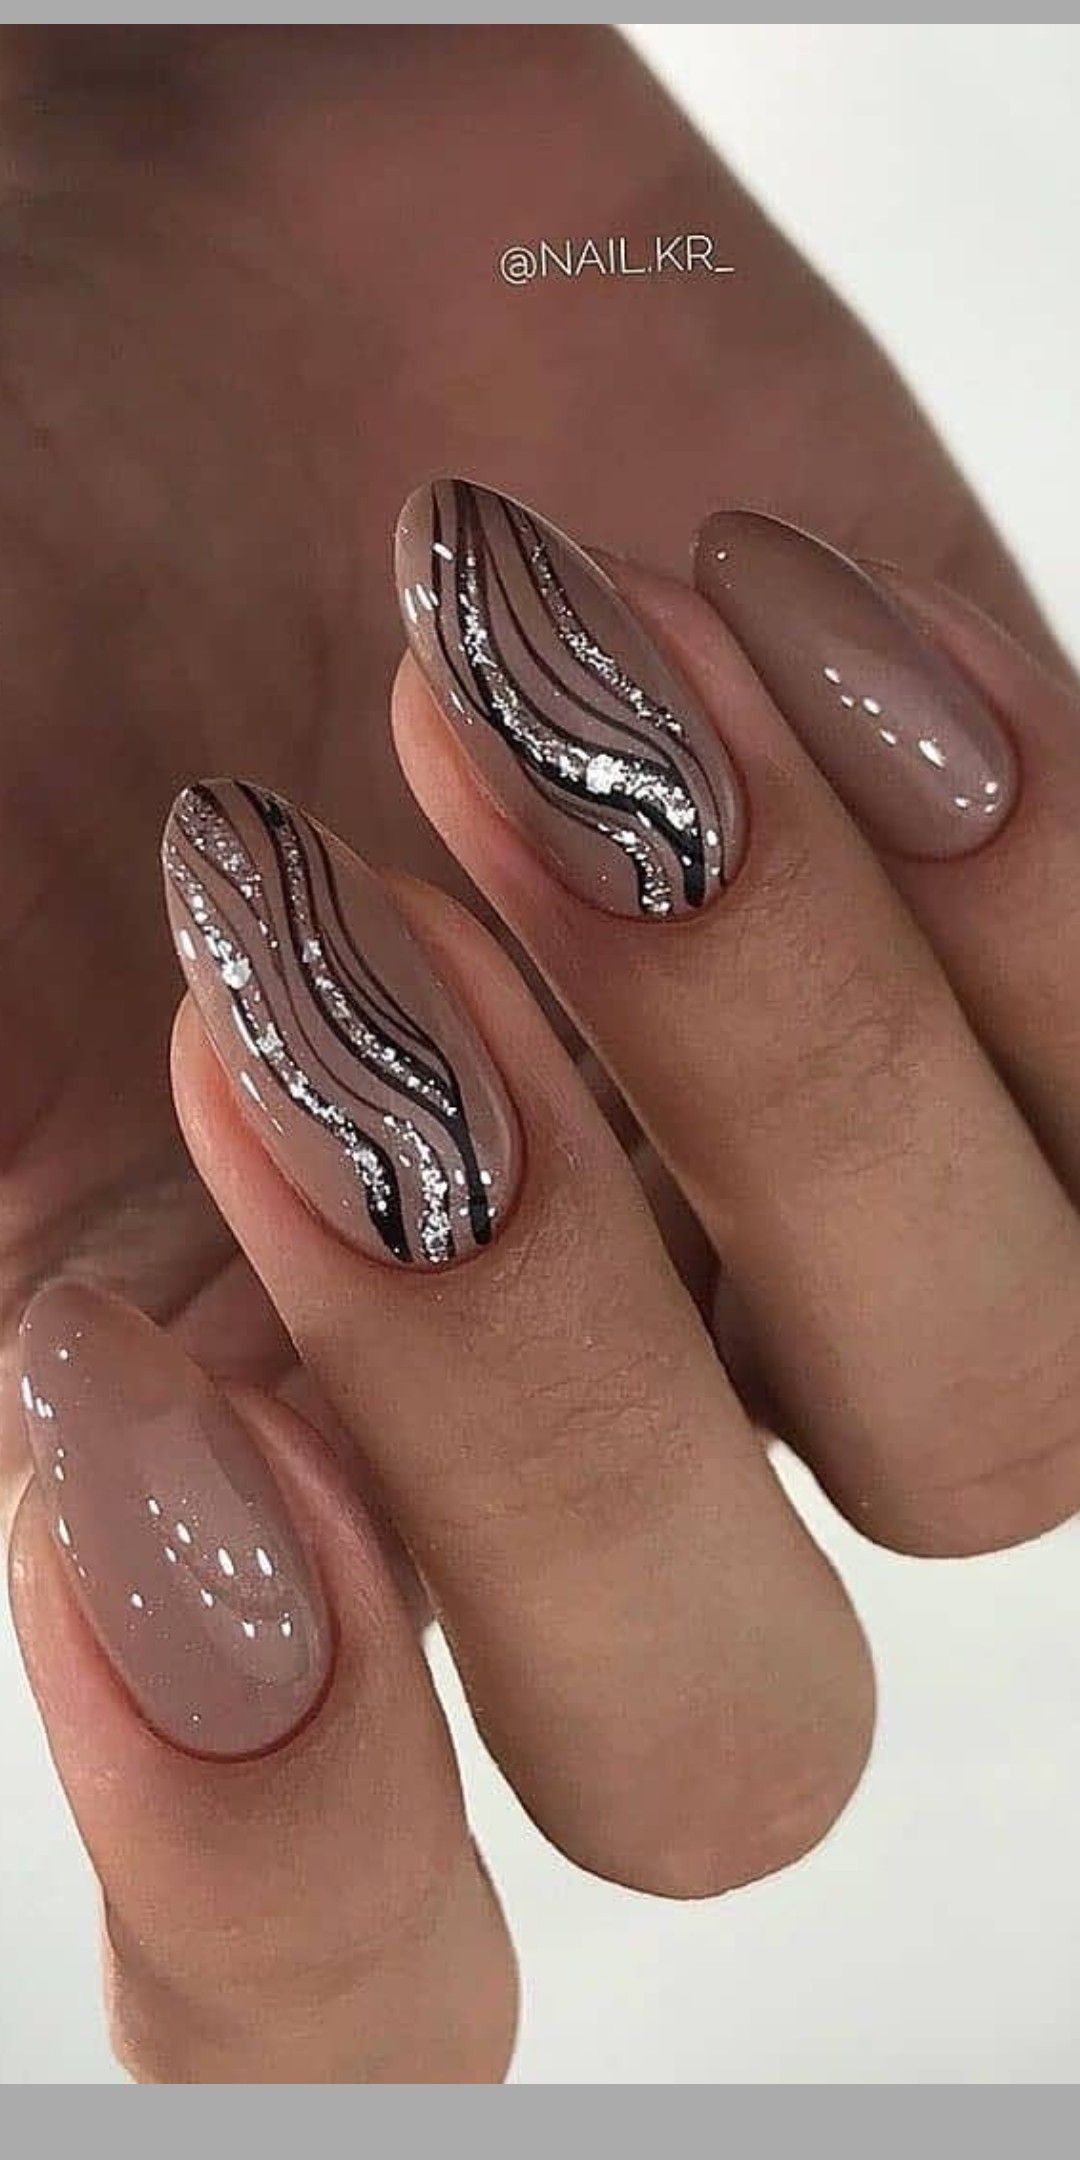 Pin By Sheila Hammond On Manikyur In 2020 Pretty Acrylic Nails Pretty Nail Art Designs Nail Designs